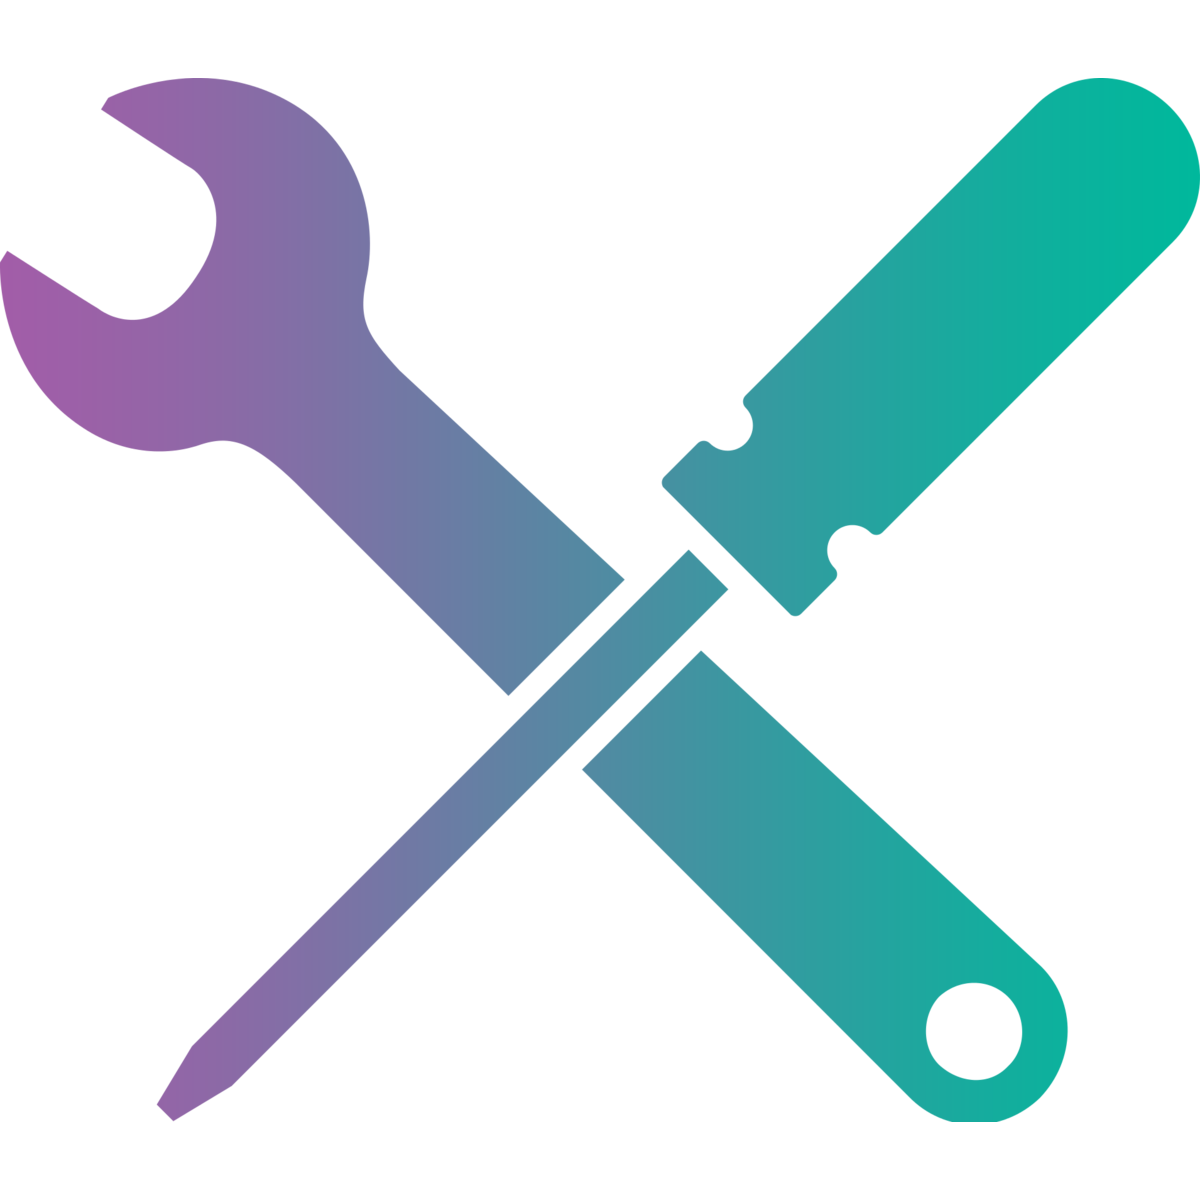 tool clipart maintenance